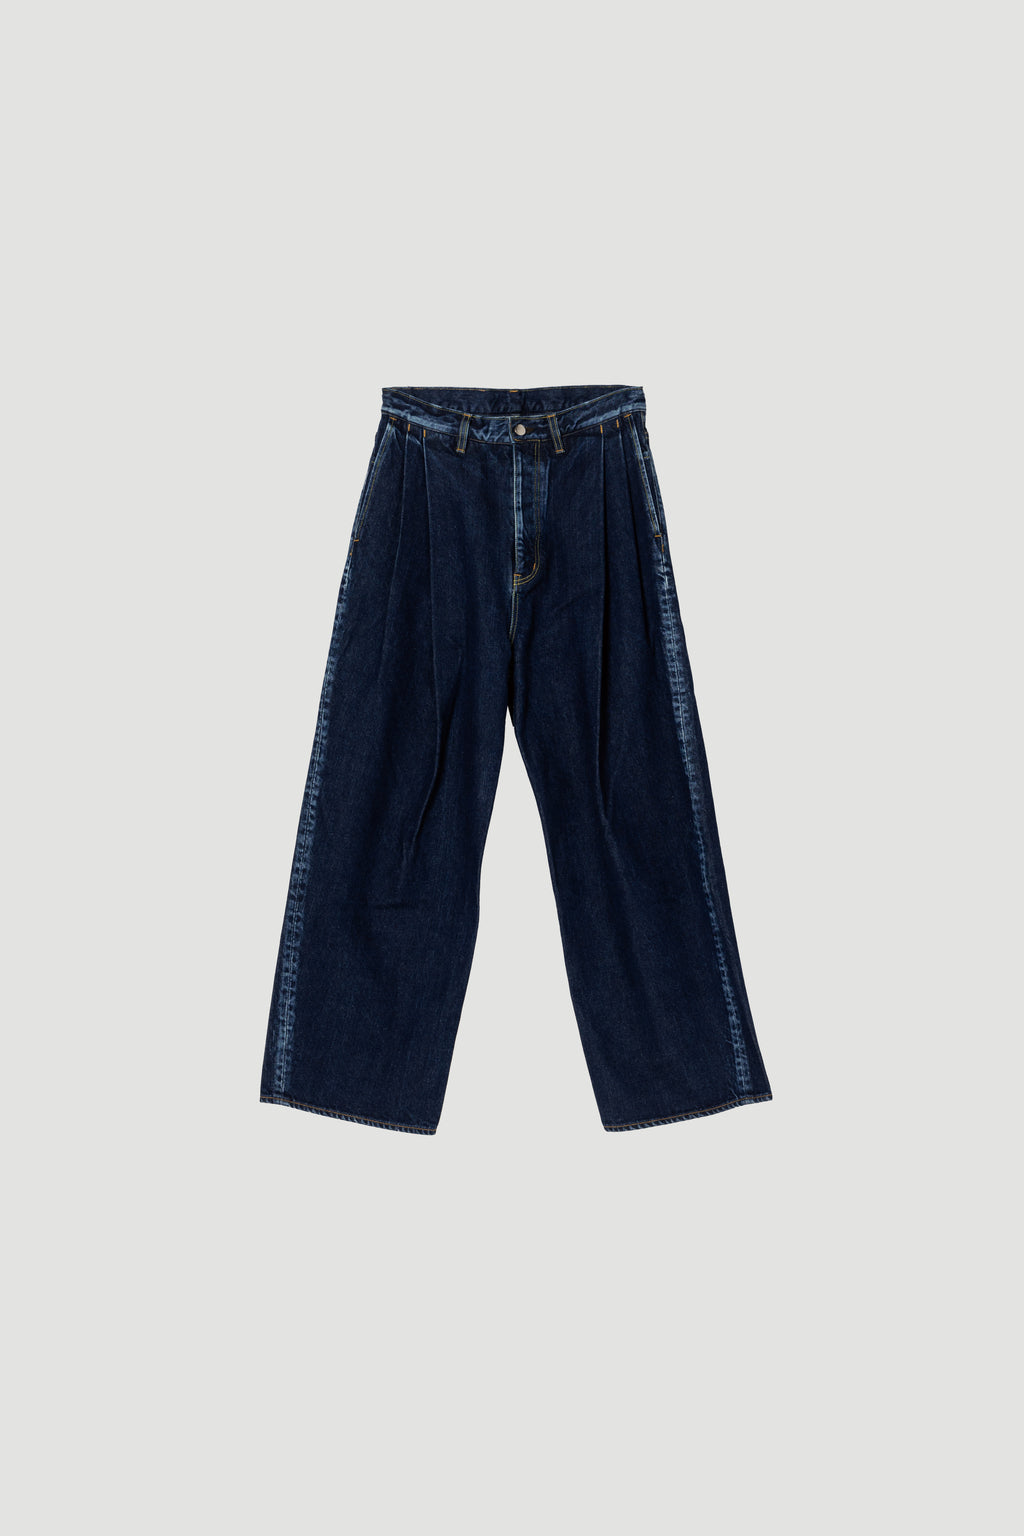 BENNUCotton/Linen denim 2-tuck wide pants